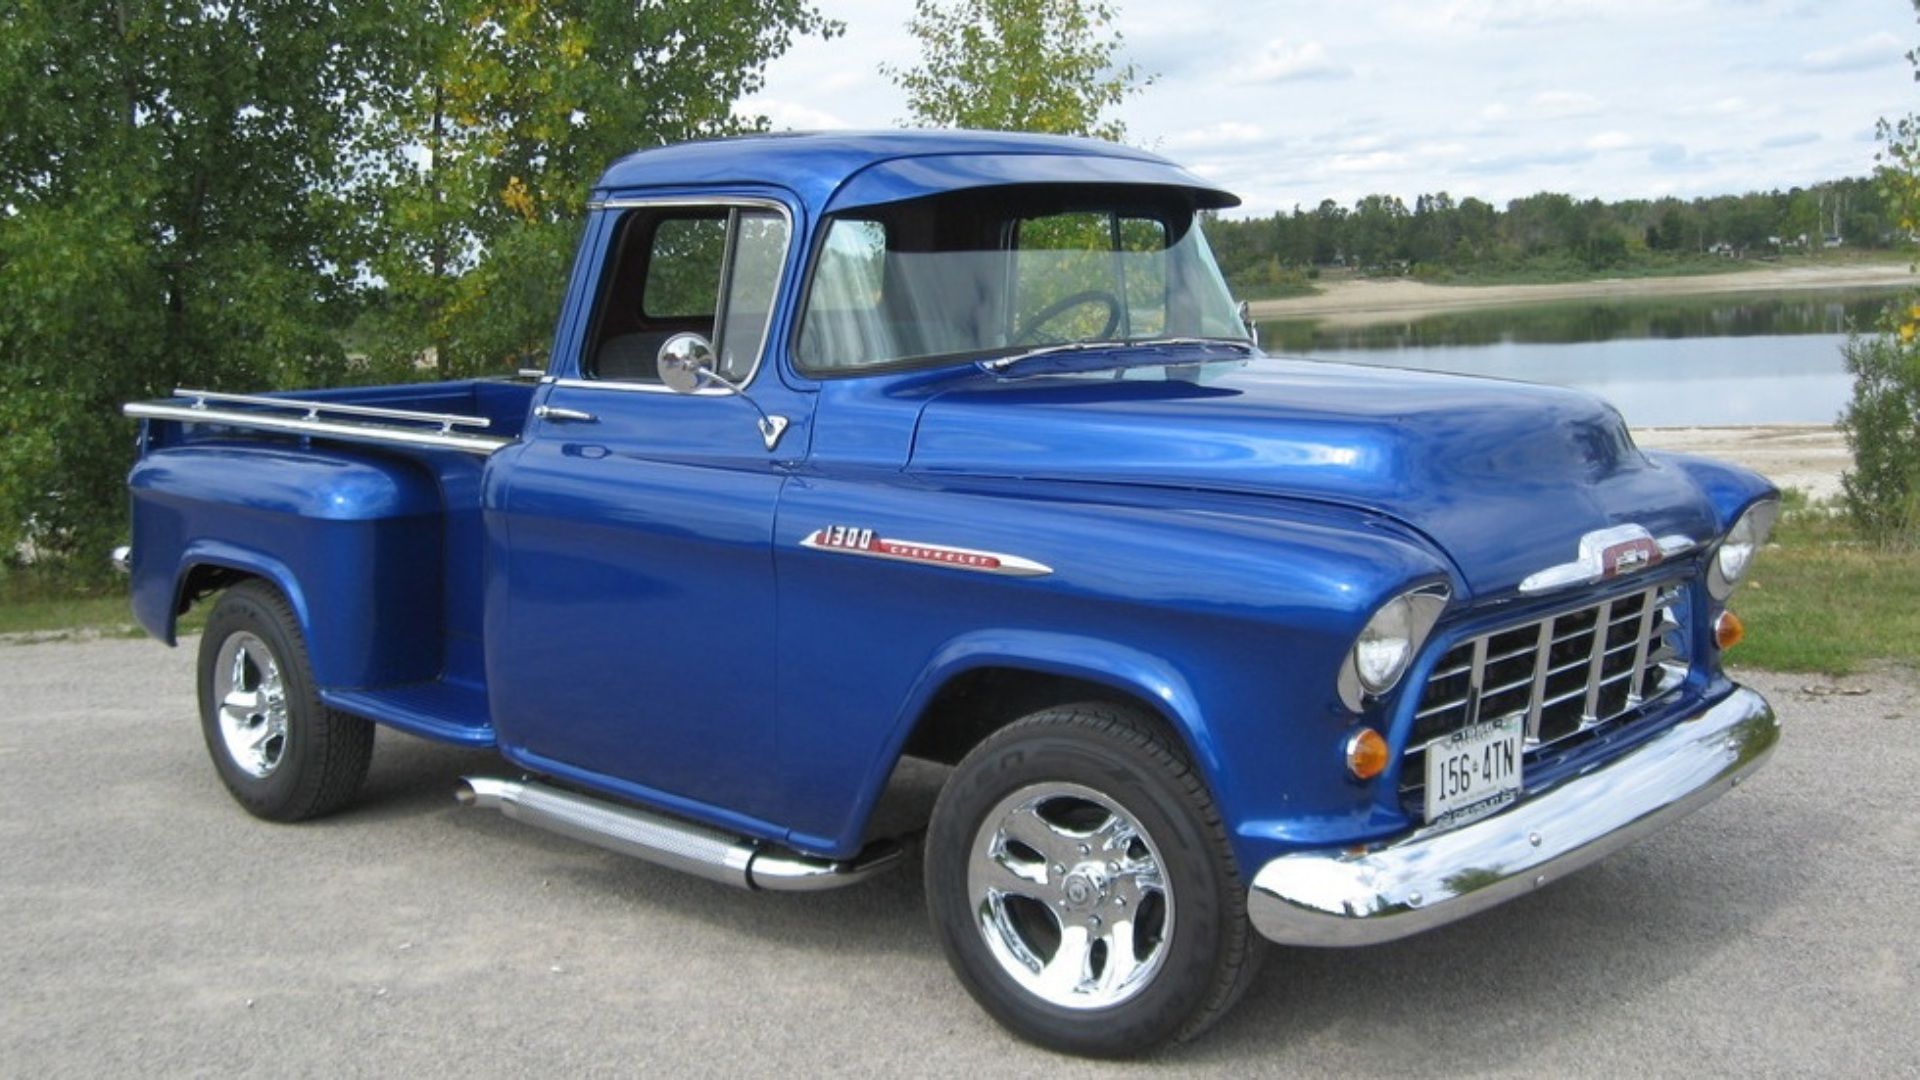 Viper Blue Chevy Pickup. Chevy pickups, Chevy pickup trucks, Pickup trucks